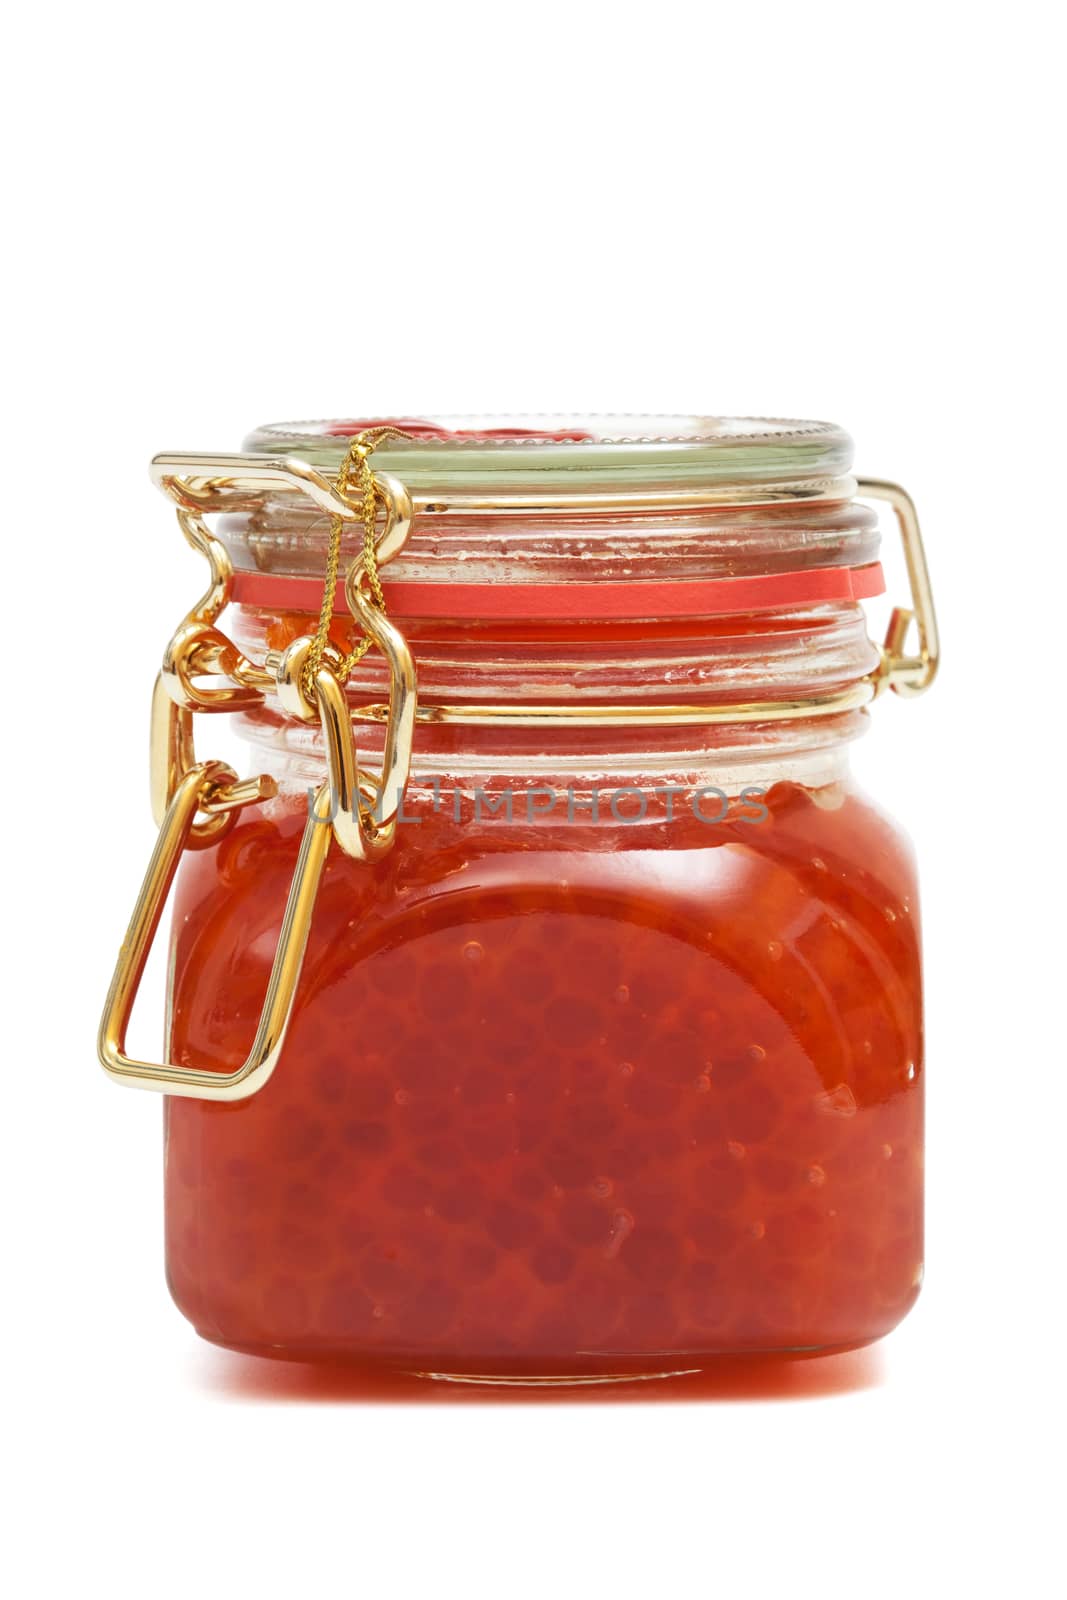 Red caviar in glass jar  by terex